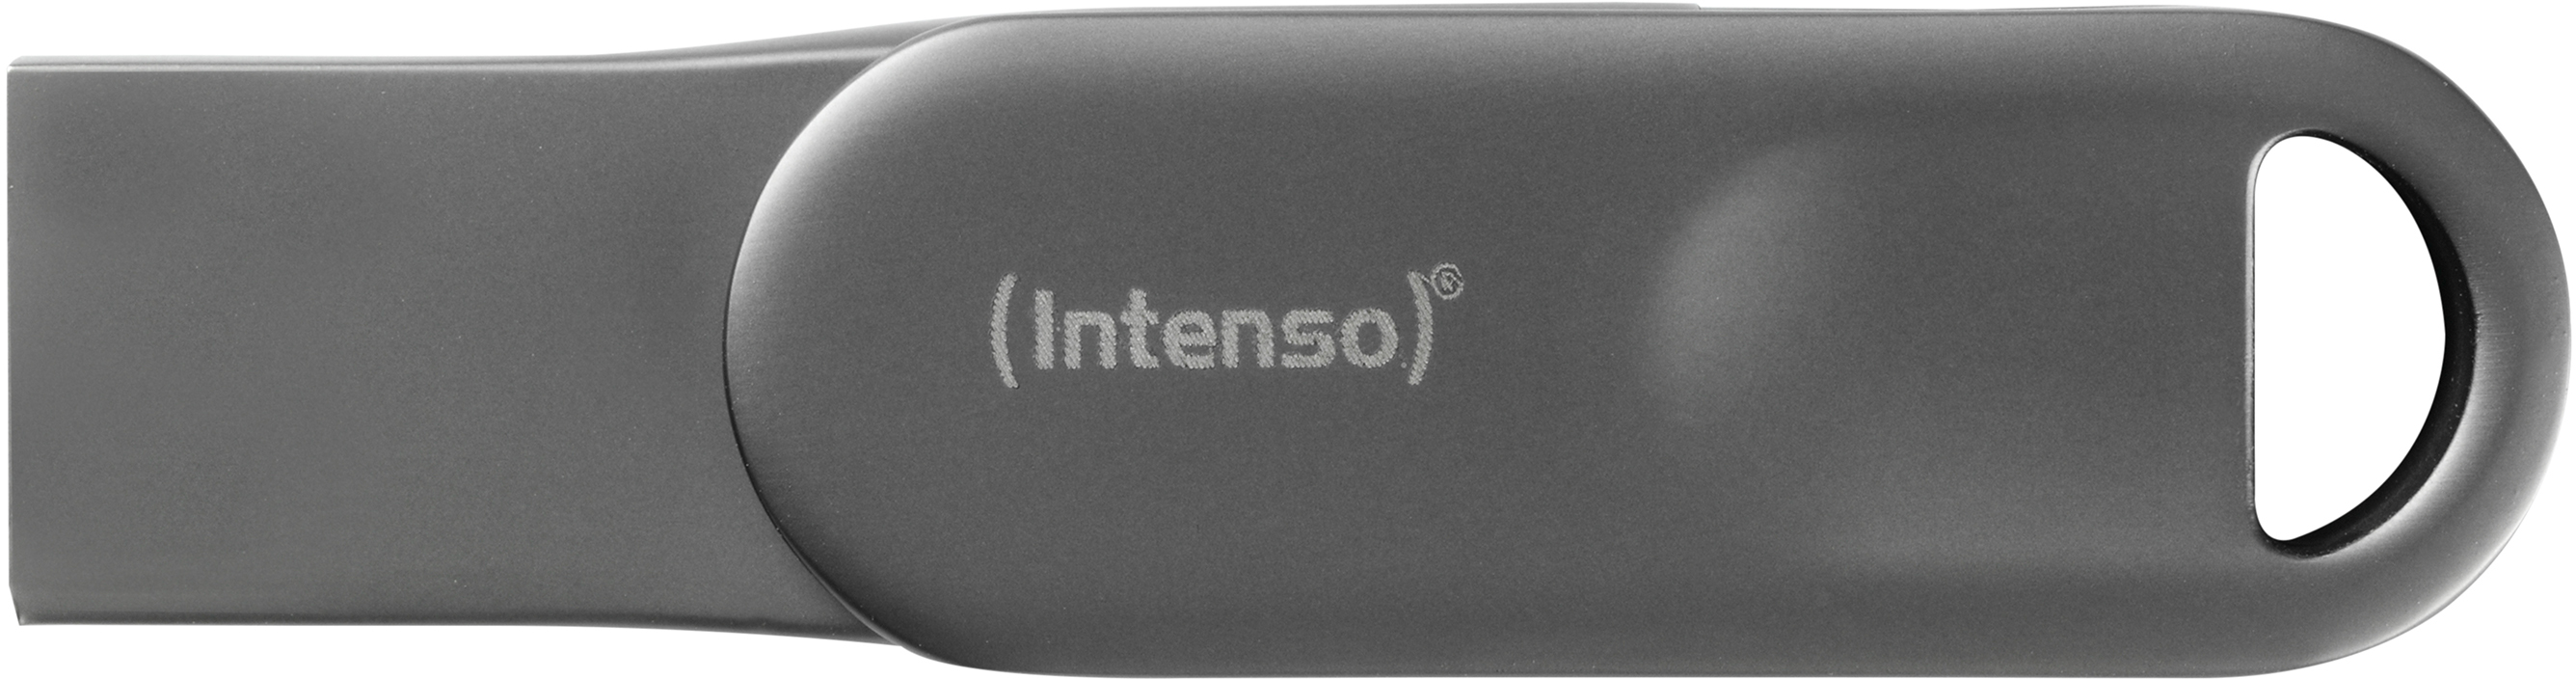 INTENSO IMOBILE LINE PRO Apple Lightning mit GB, USB-Stick, Connector 70 64 MB/s, Anthrazit